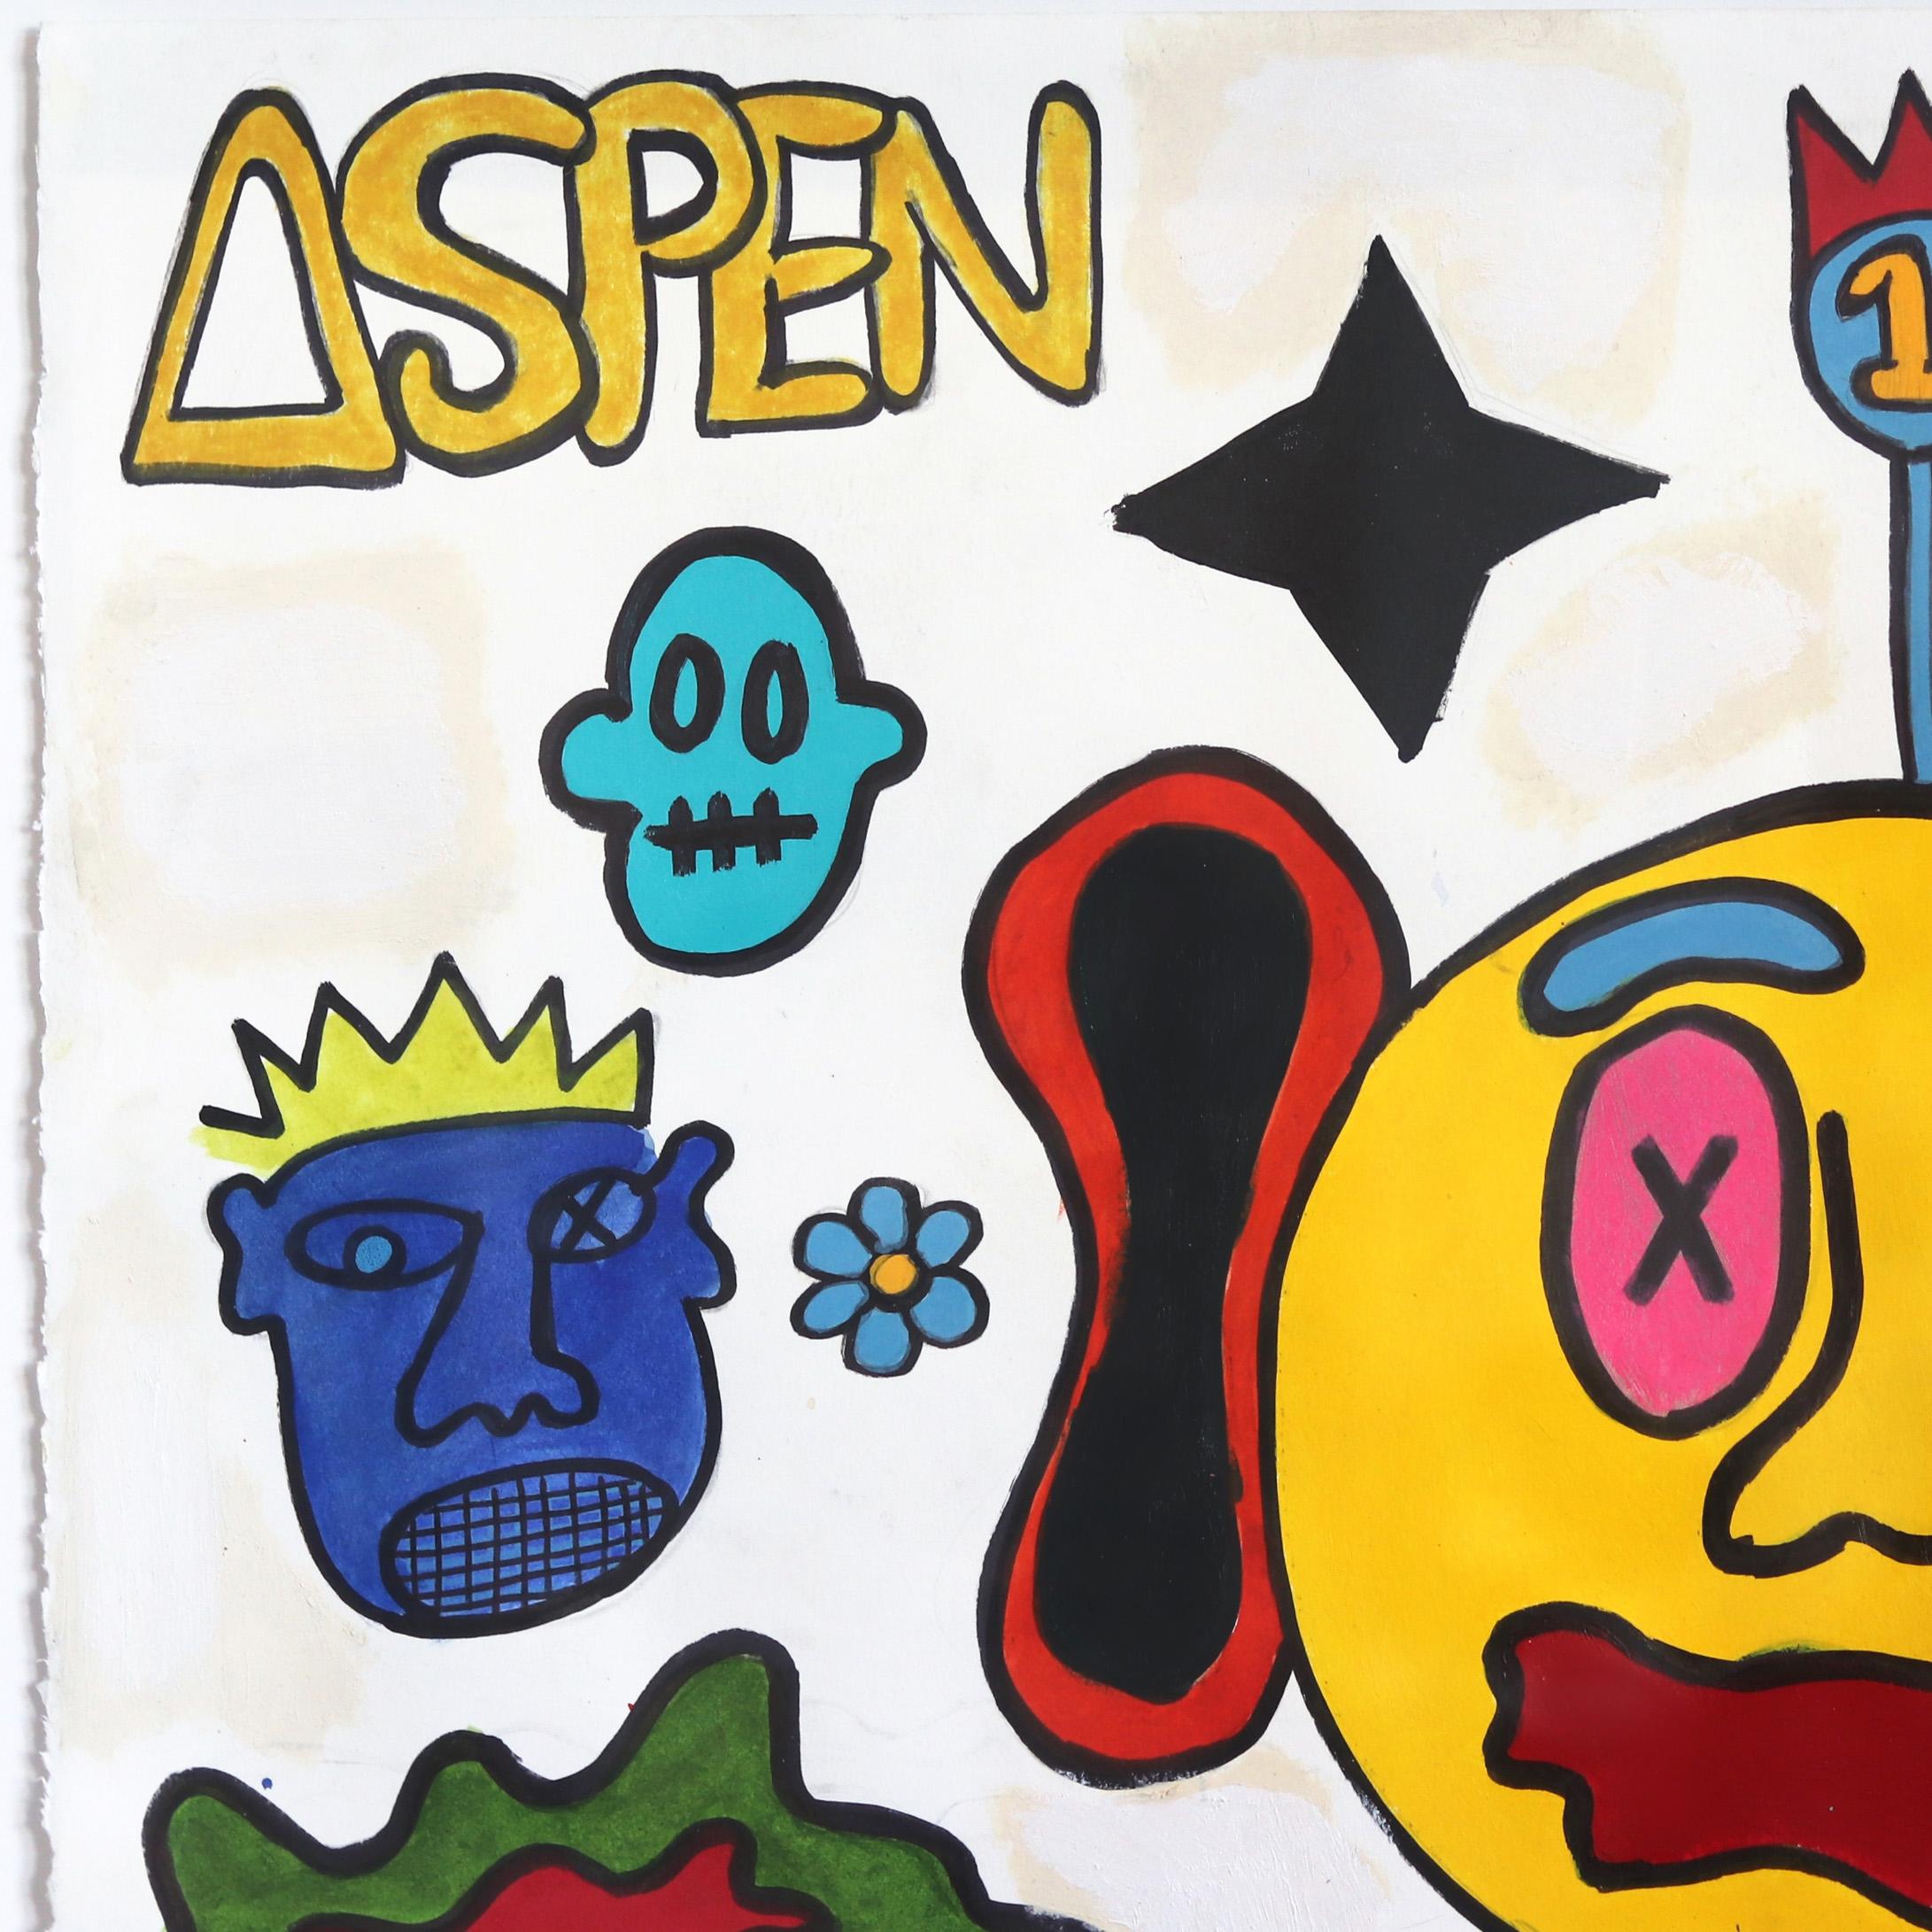 Aspen to LA – Buntes, figuratives, abstraktes, gerahmtes Original-Street-Kunstgemälde (Streetart), Painting, von Alex Reagan